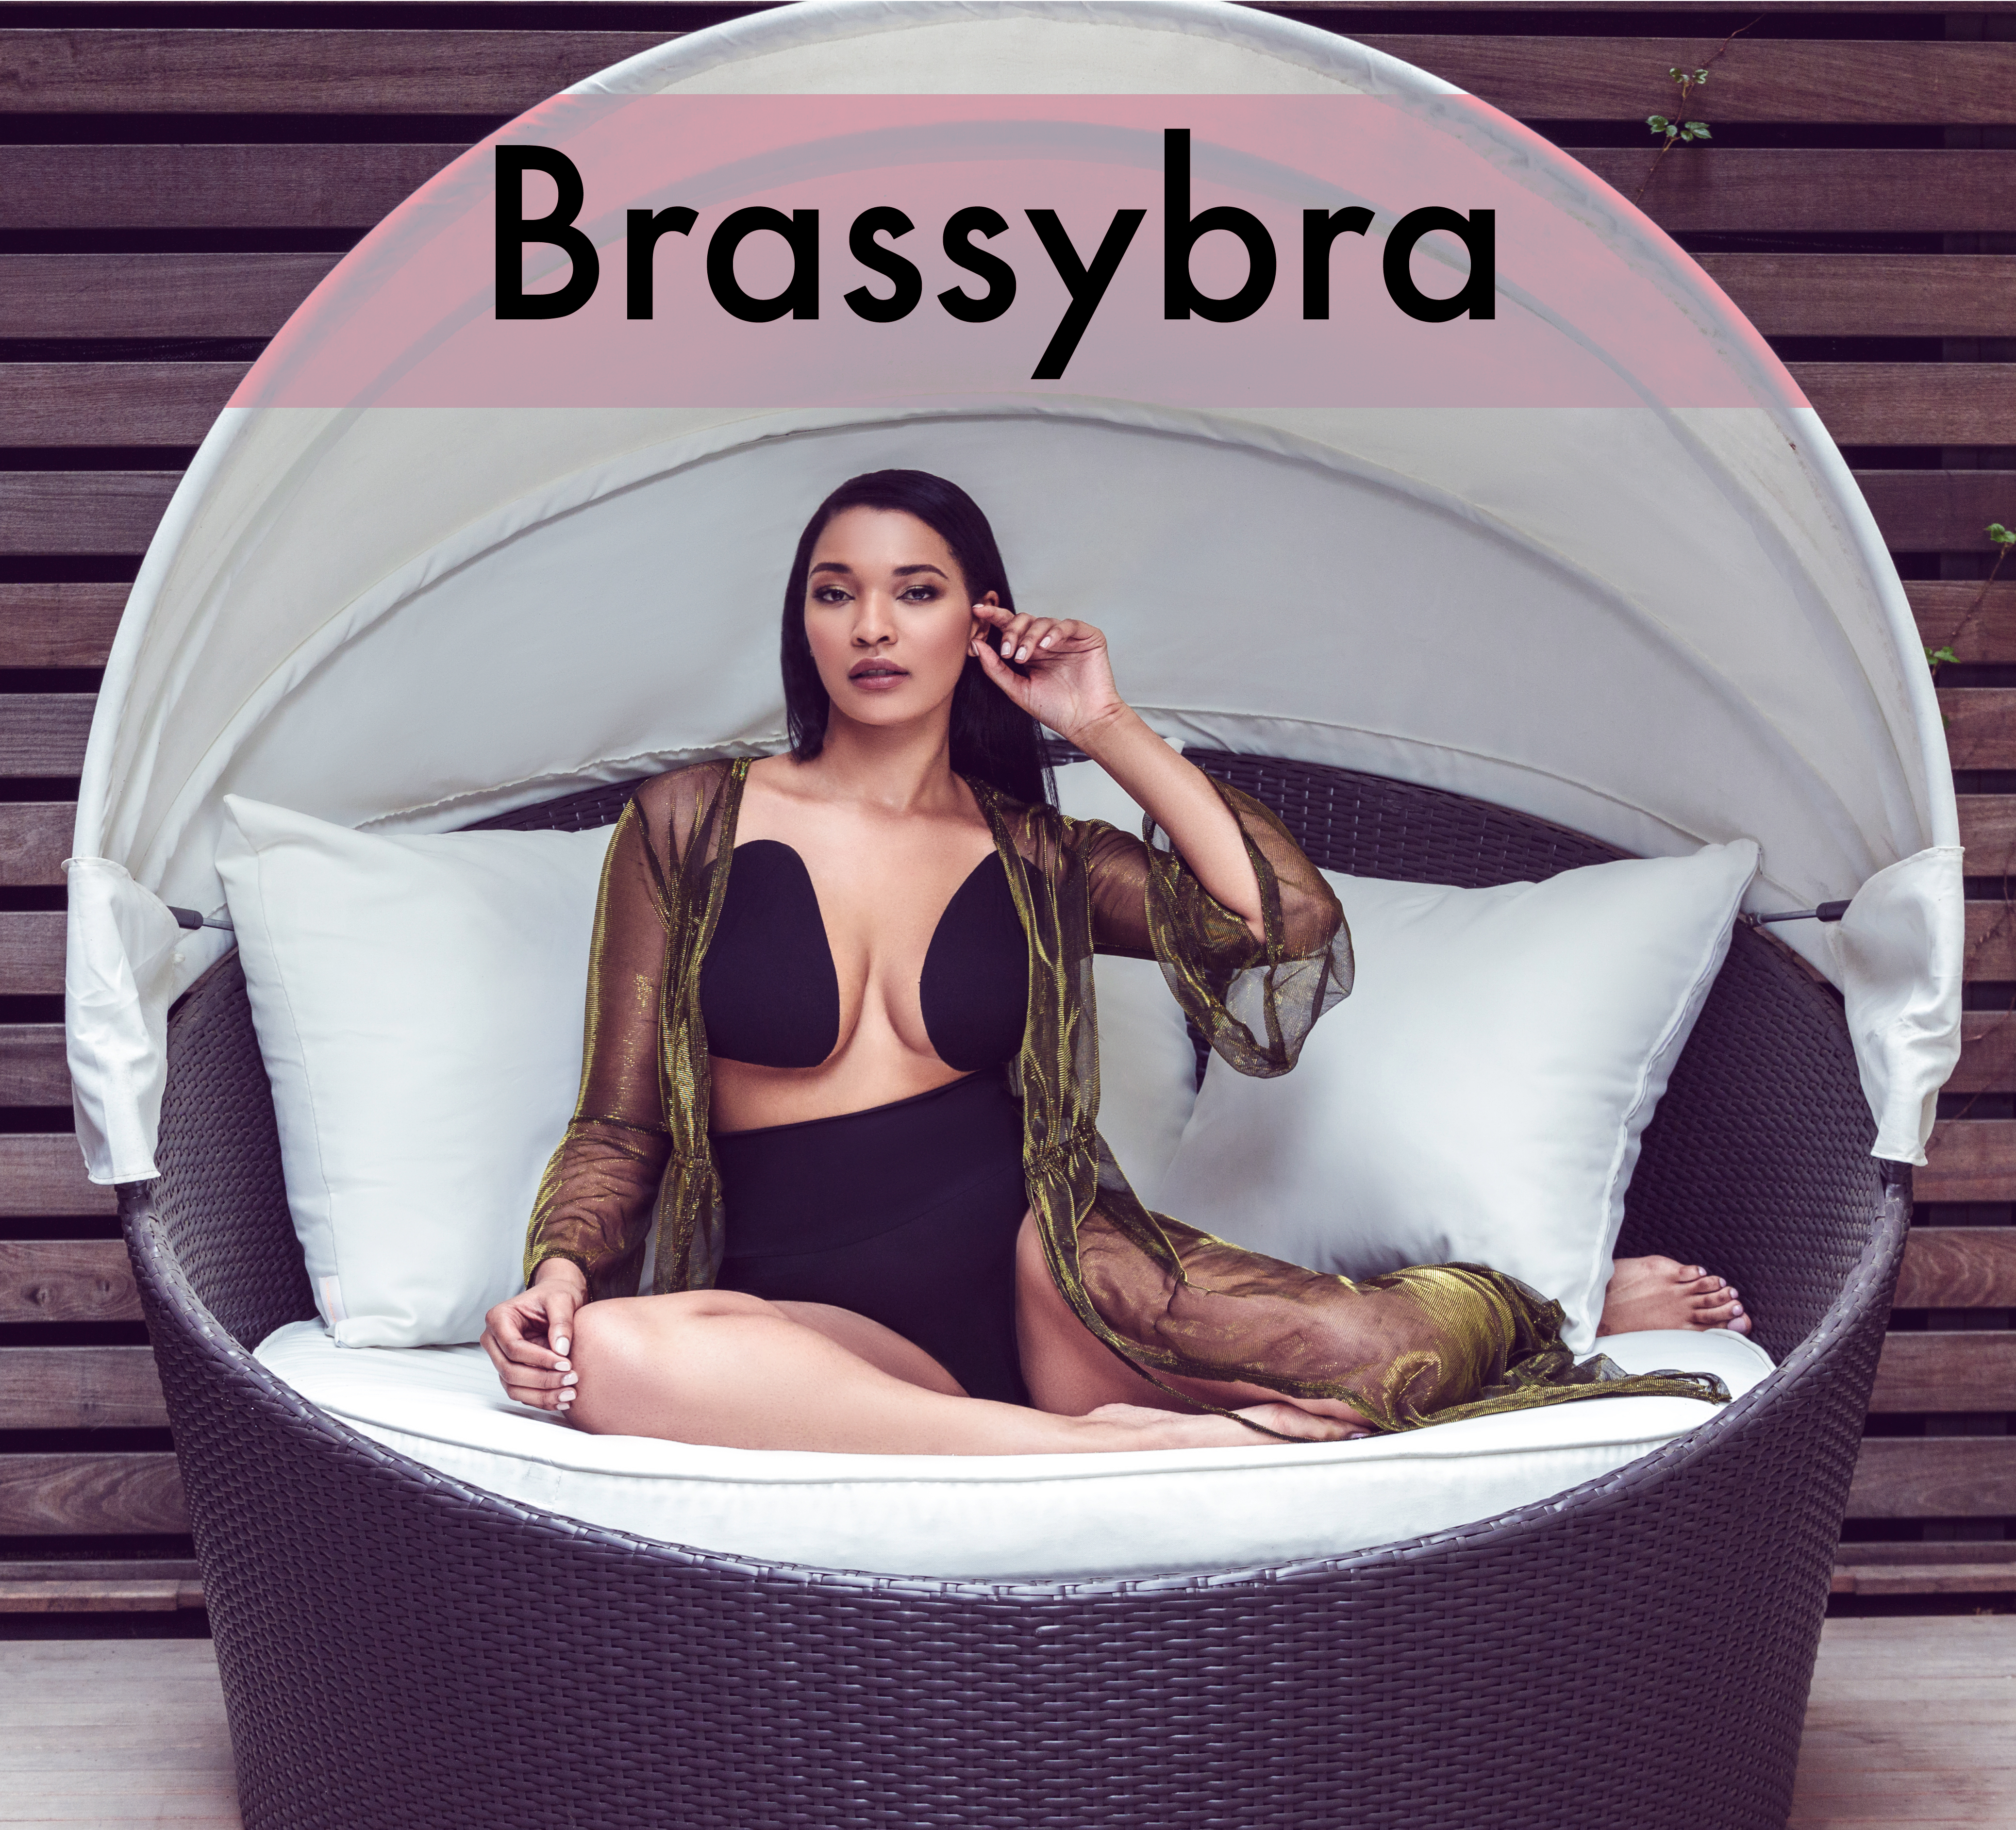 News-Brassybra X Addition Elle-BRASSYBRA